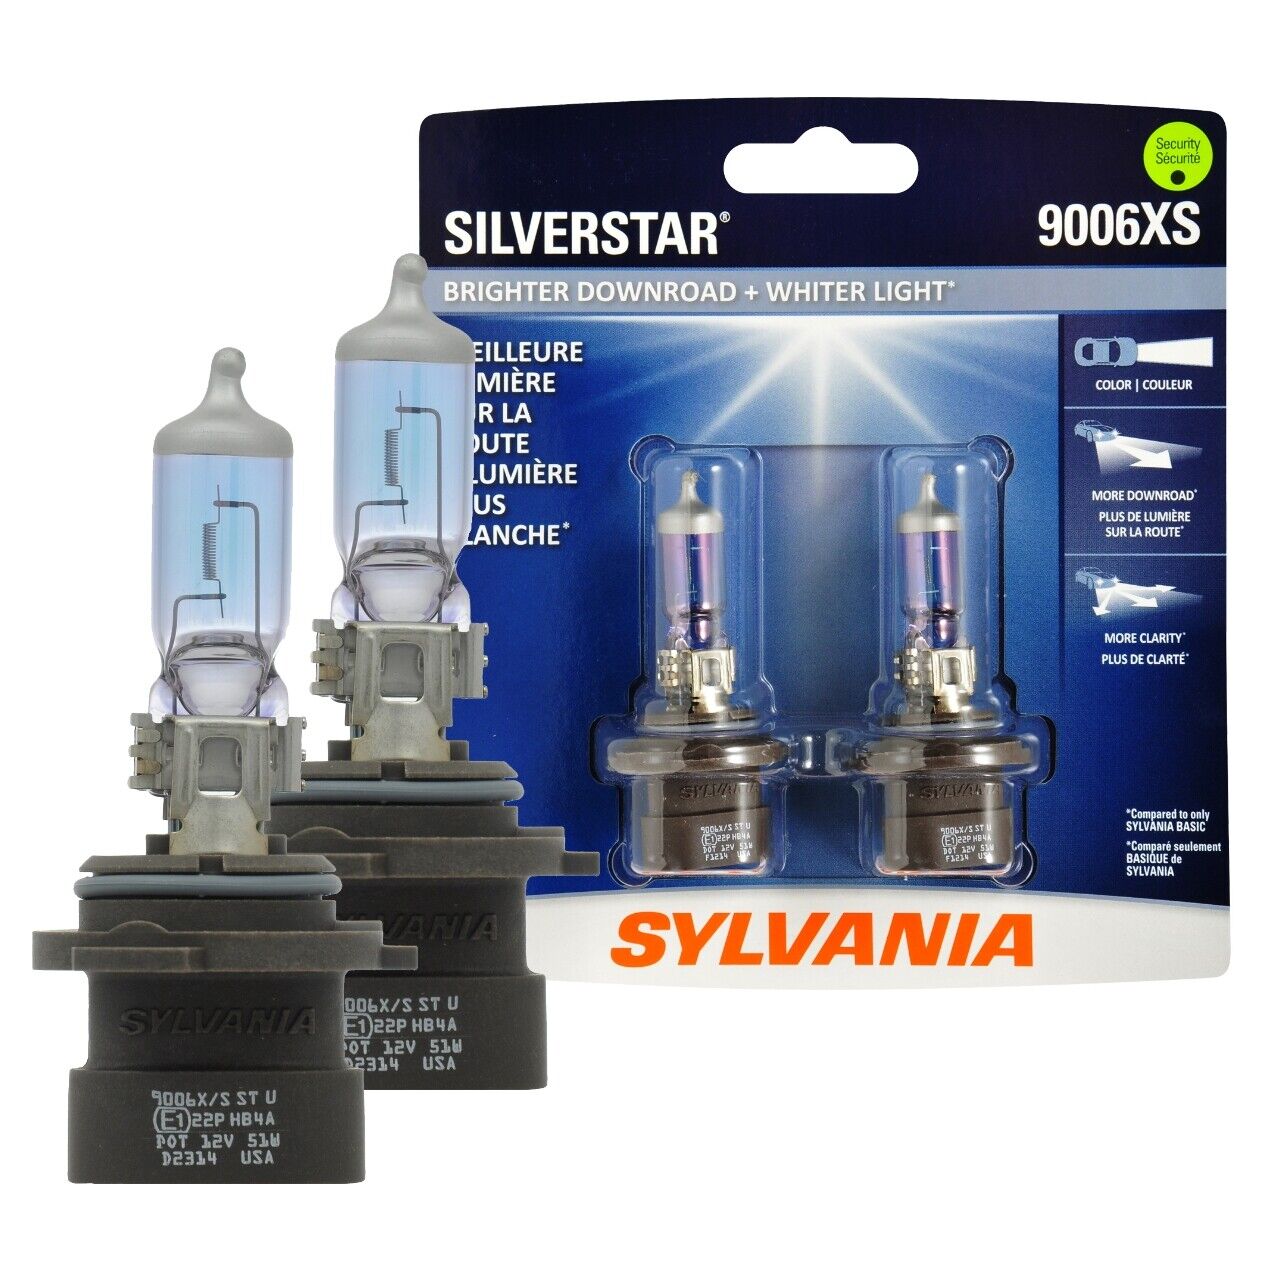 SYLVANIA 9006XS SilverStar High Performance Halogen Headlight Bulb, 2 Bulbs